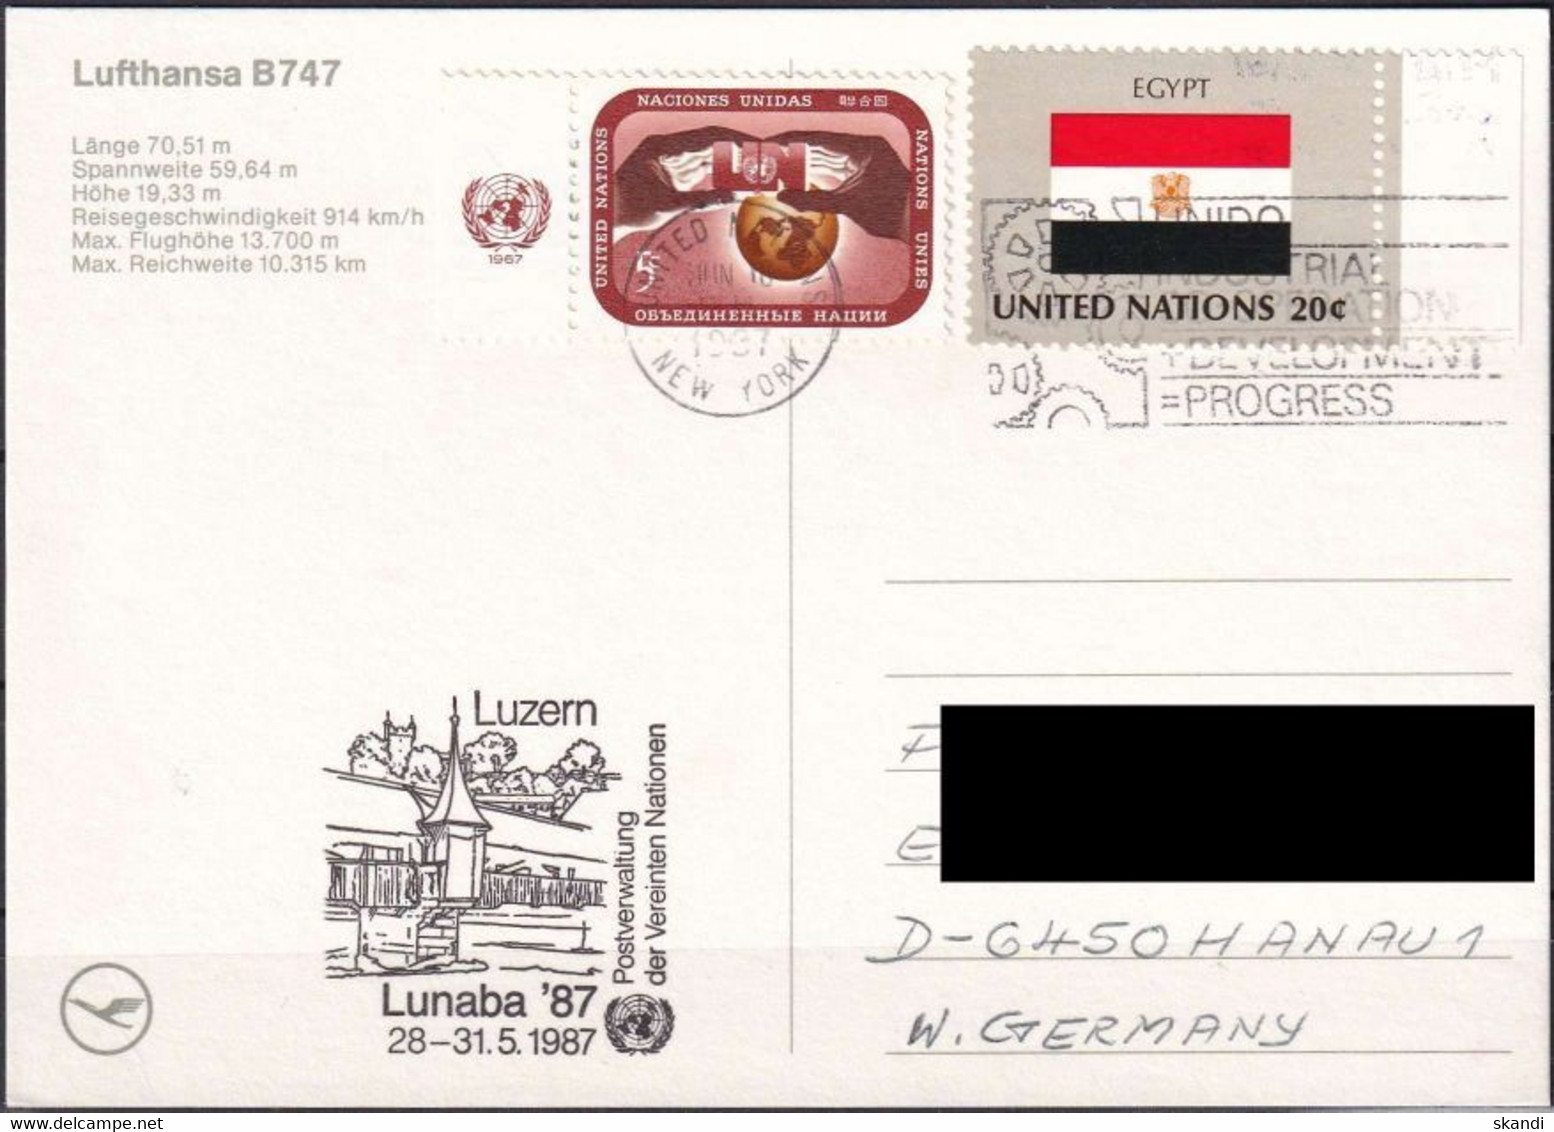 UNO NEW YORK 1987 Postkarte Lunaba'87 Lufthansa Boeing 747 - Lettres & Documents